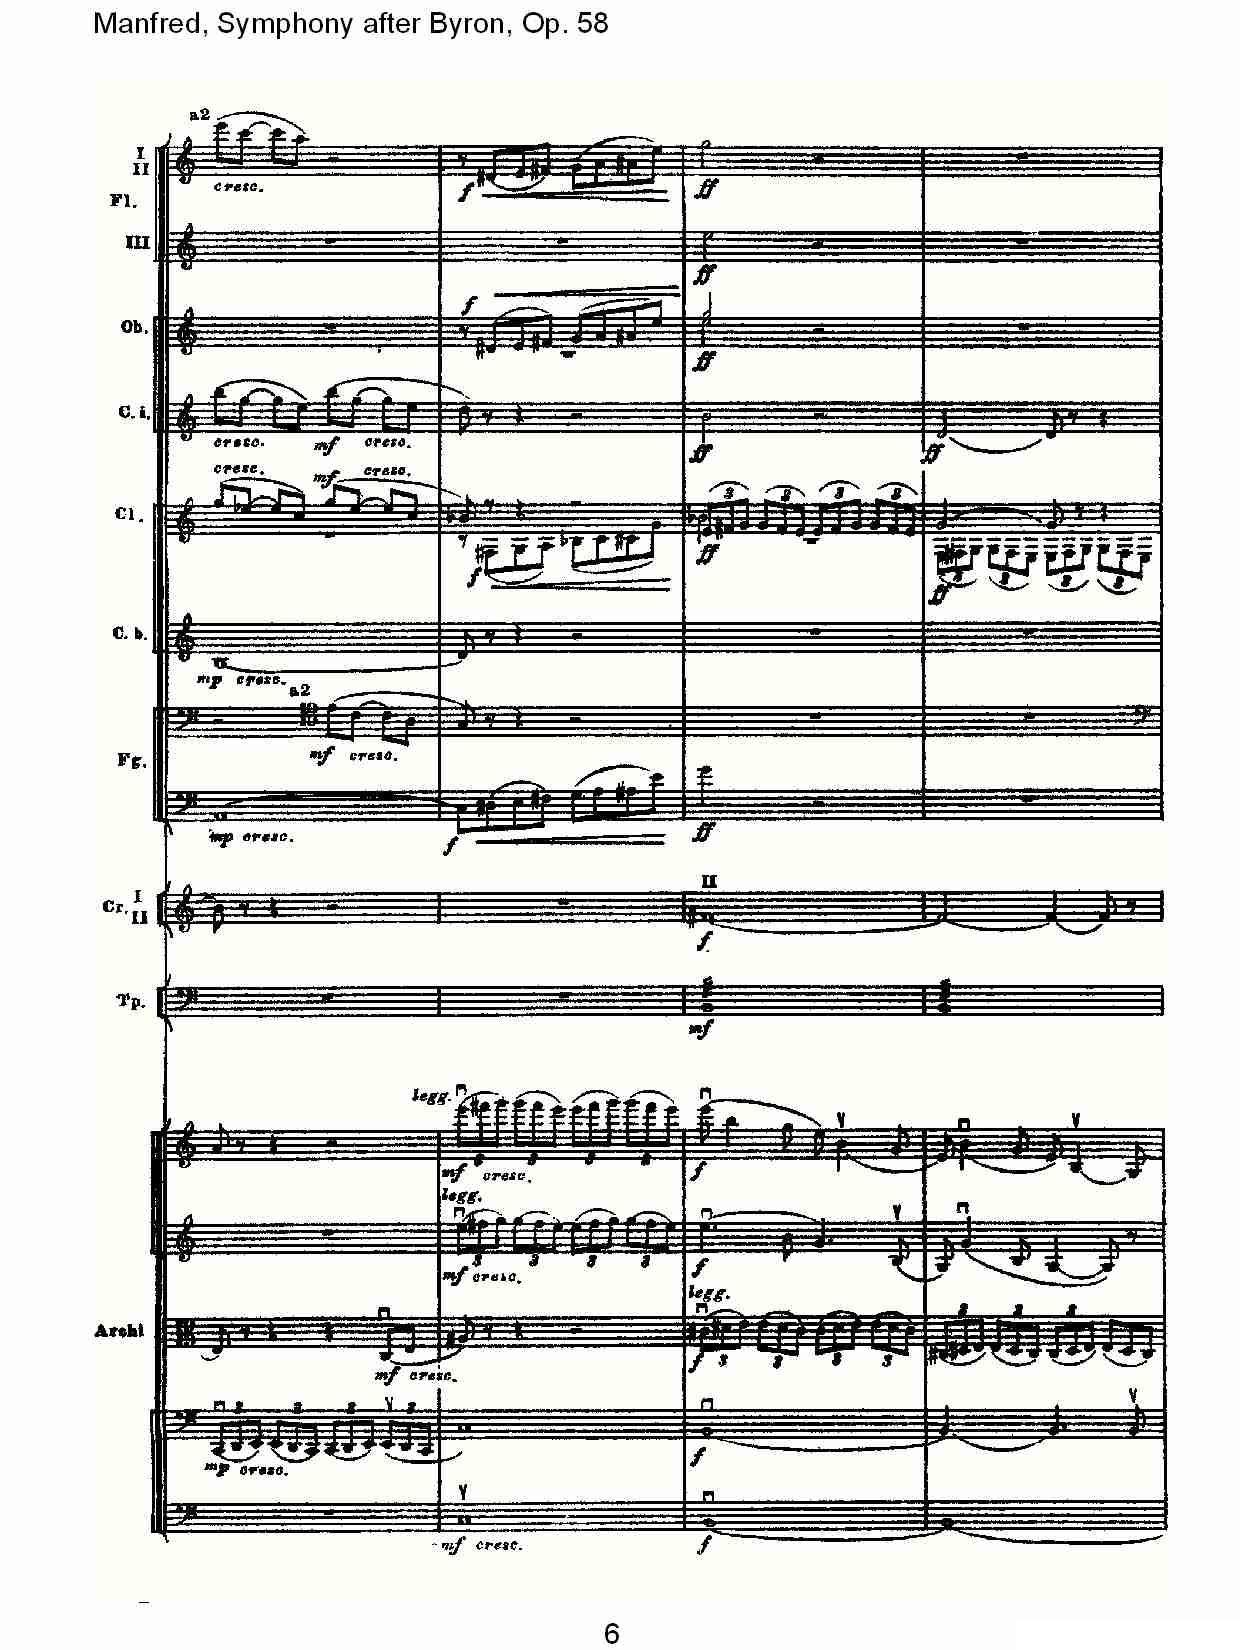 Manfred, Symphony after Byron, Op.58第一乐章（一）其它曲谱（图6）